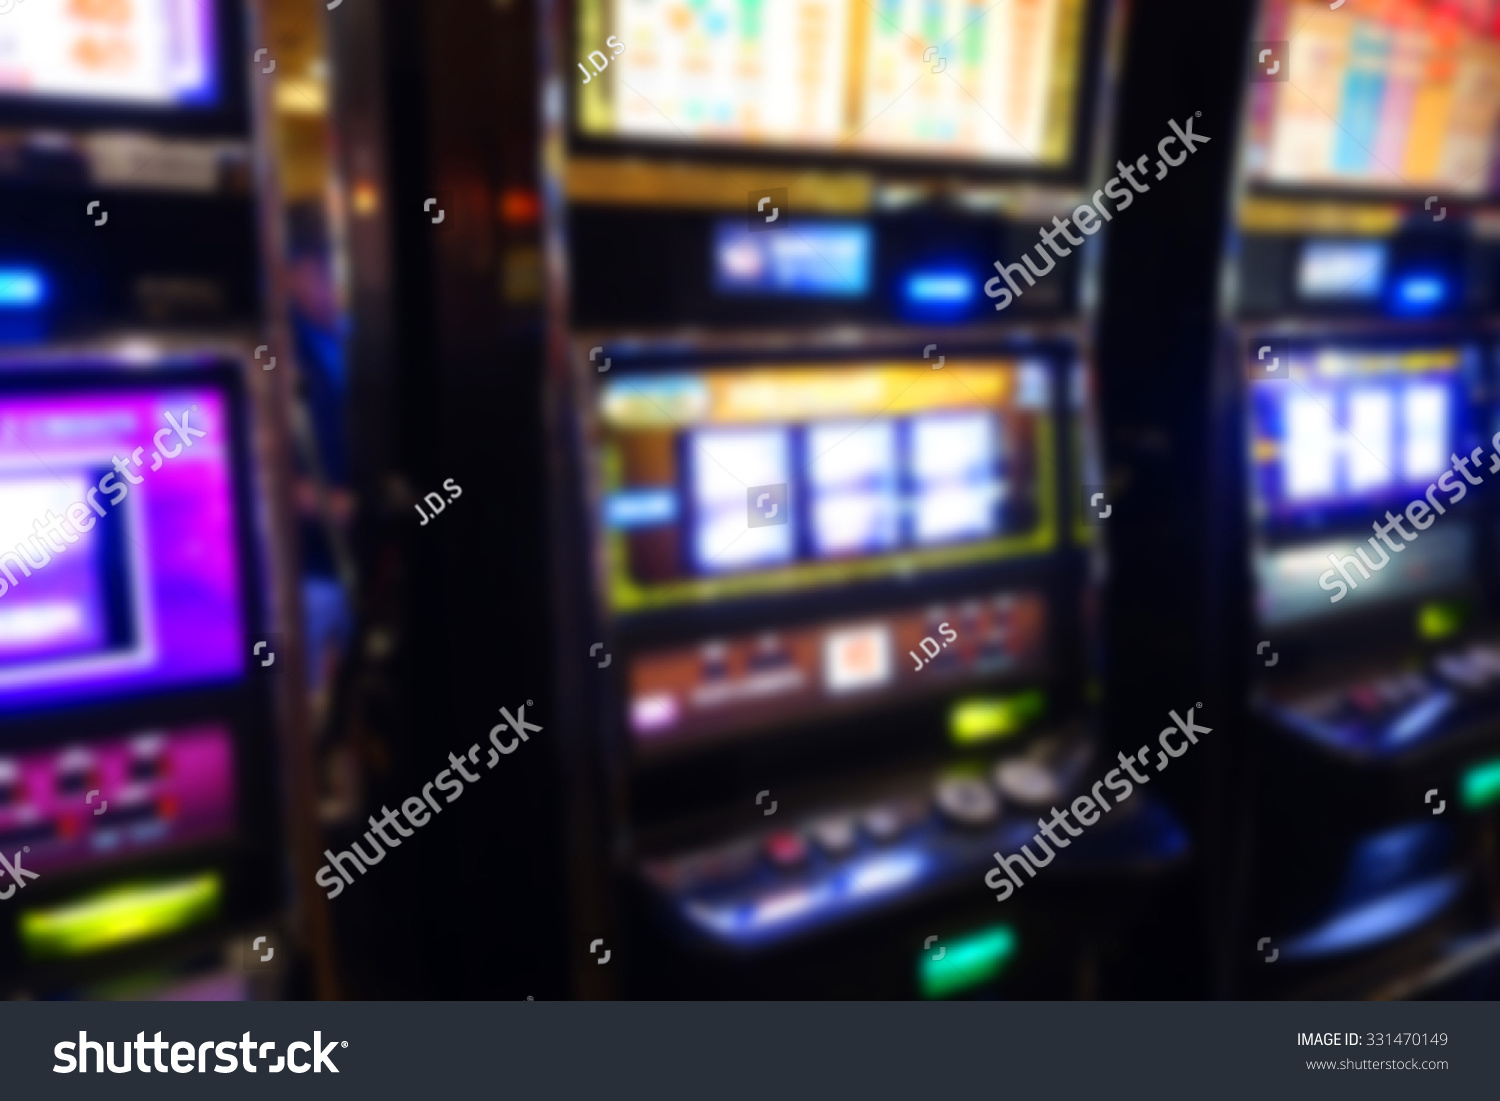 blurred background of slot machines in casino                               #331470149